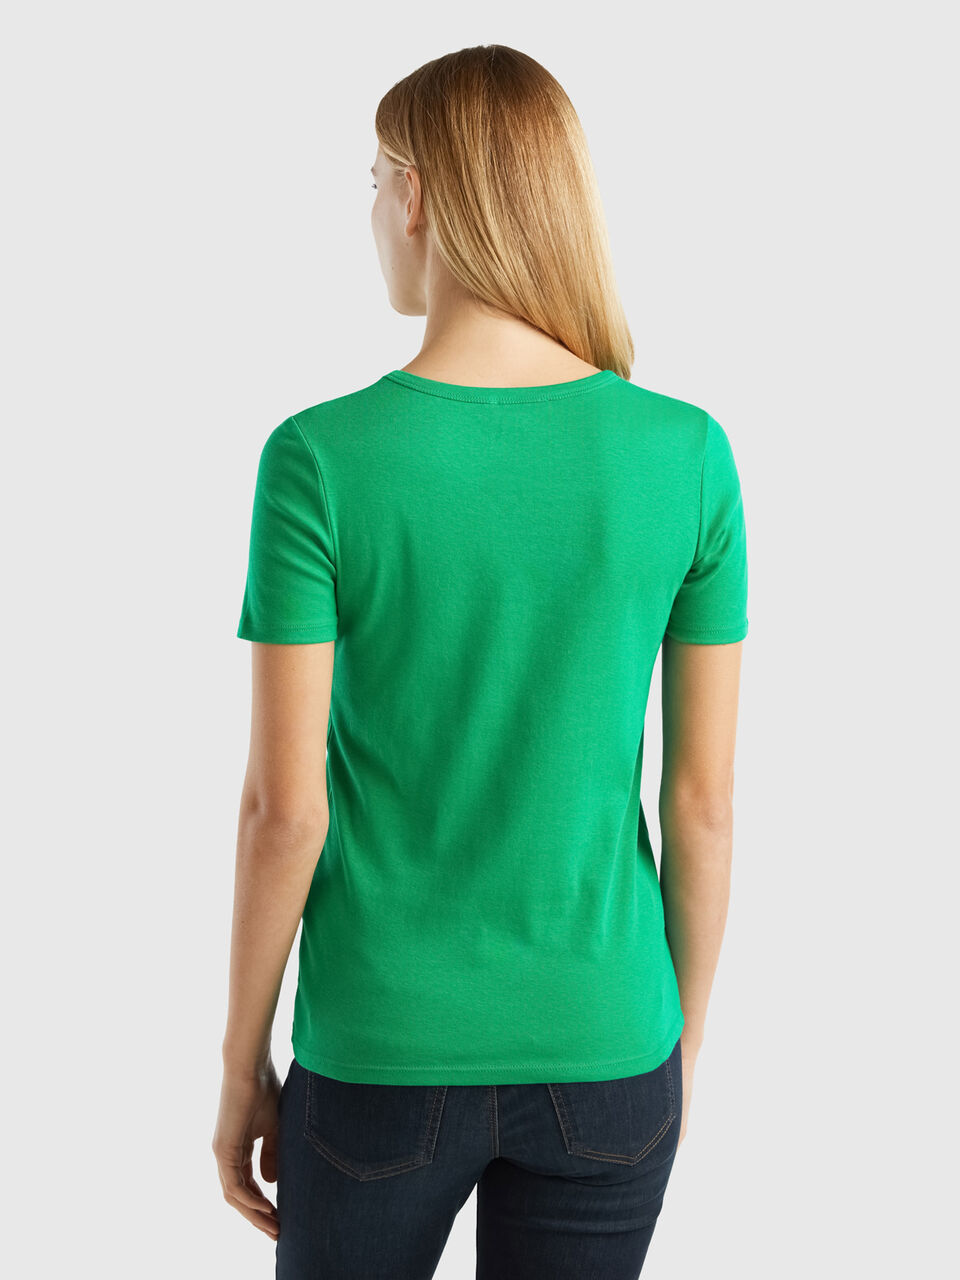 with | glitter 100% cotton Green in logo - Benetton T-shirt print